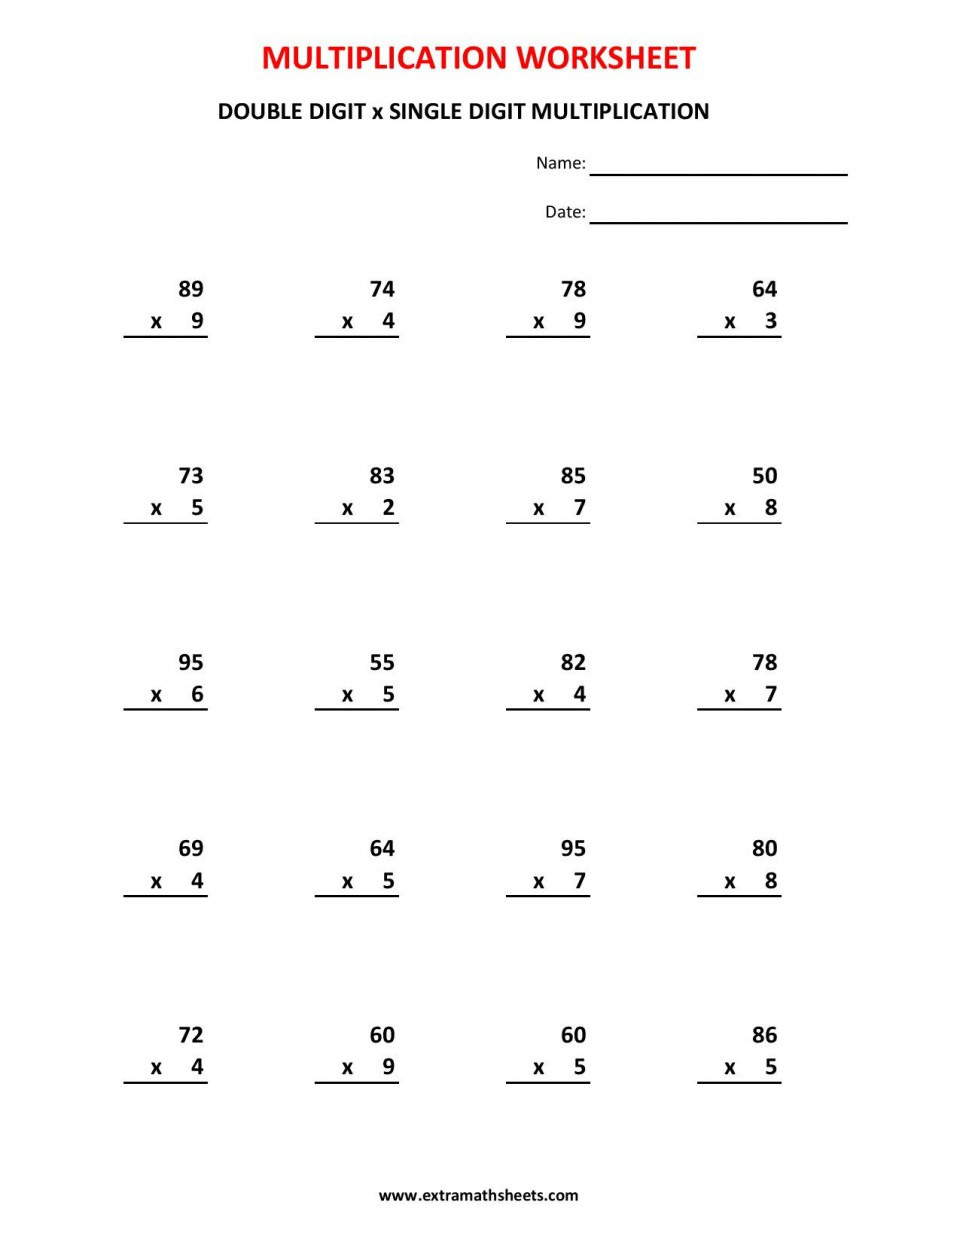 double-digit-multiplication-worksheets-worksheet-examples-multiplication-worksheets